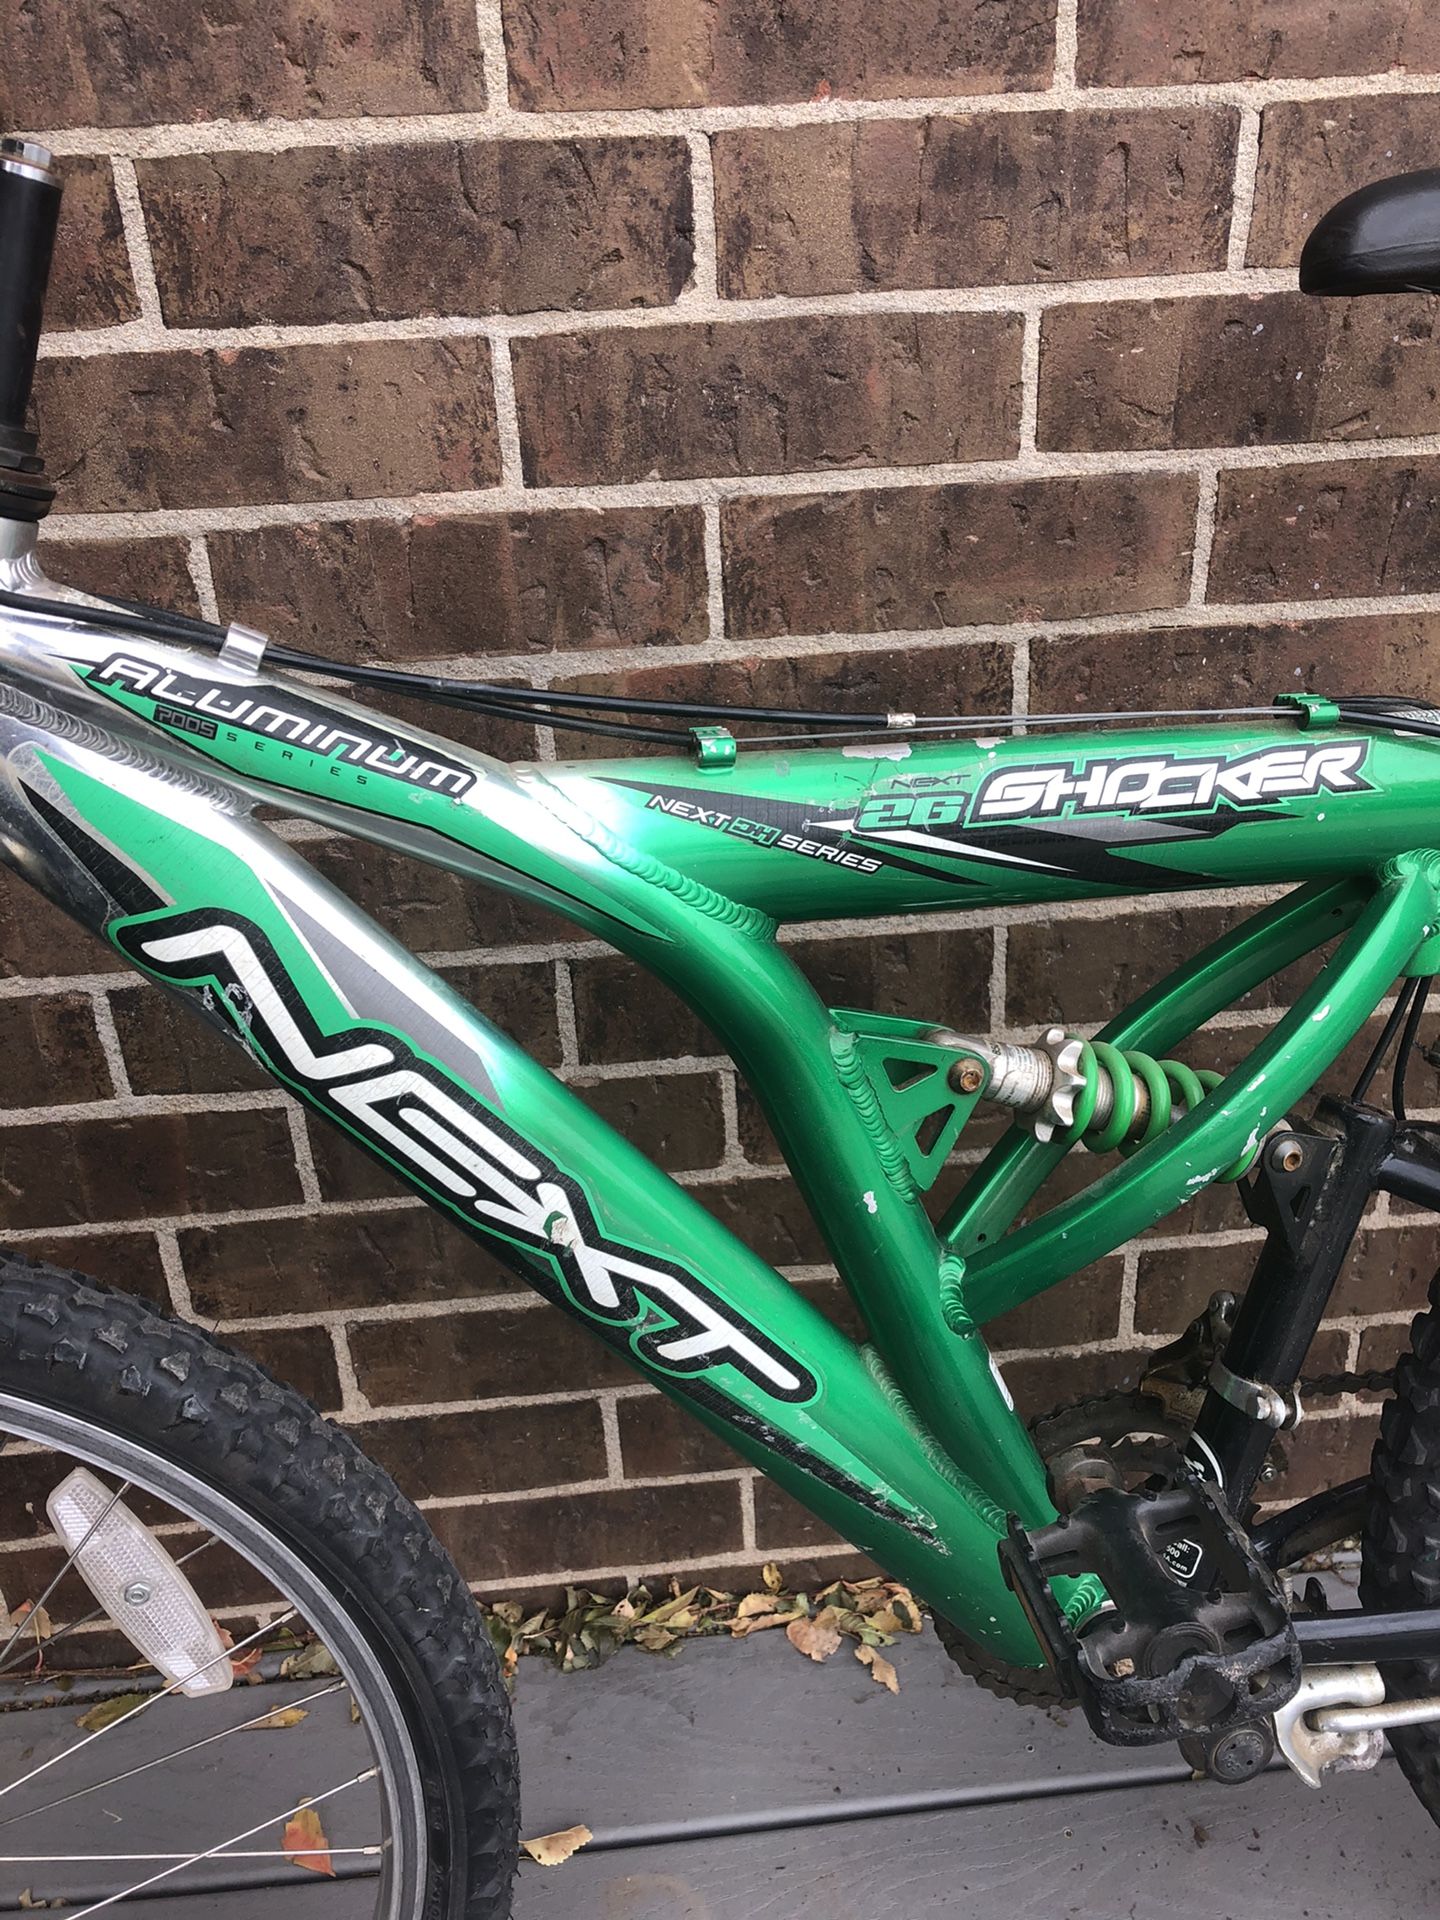 ——-26” NEXT SHOCKER full suspension mountain bike——-